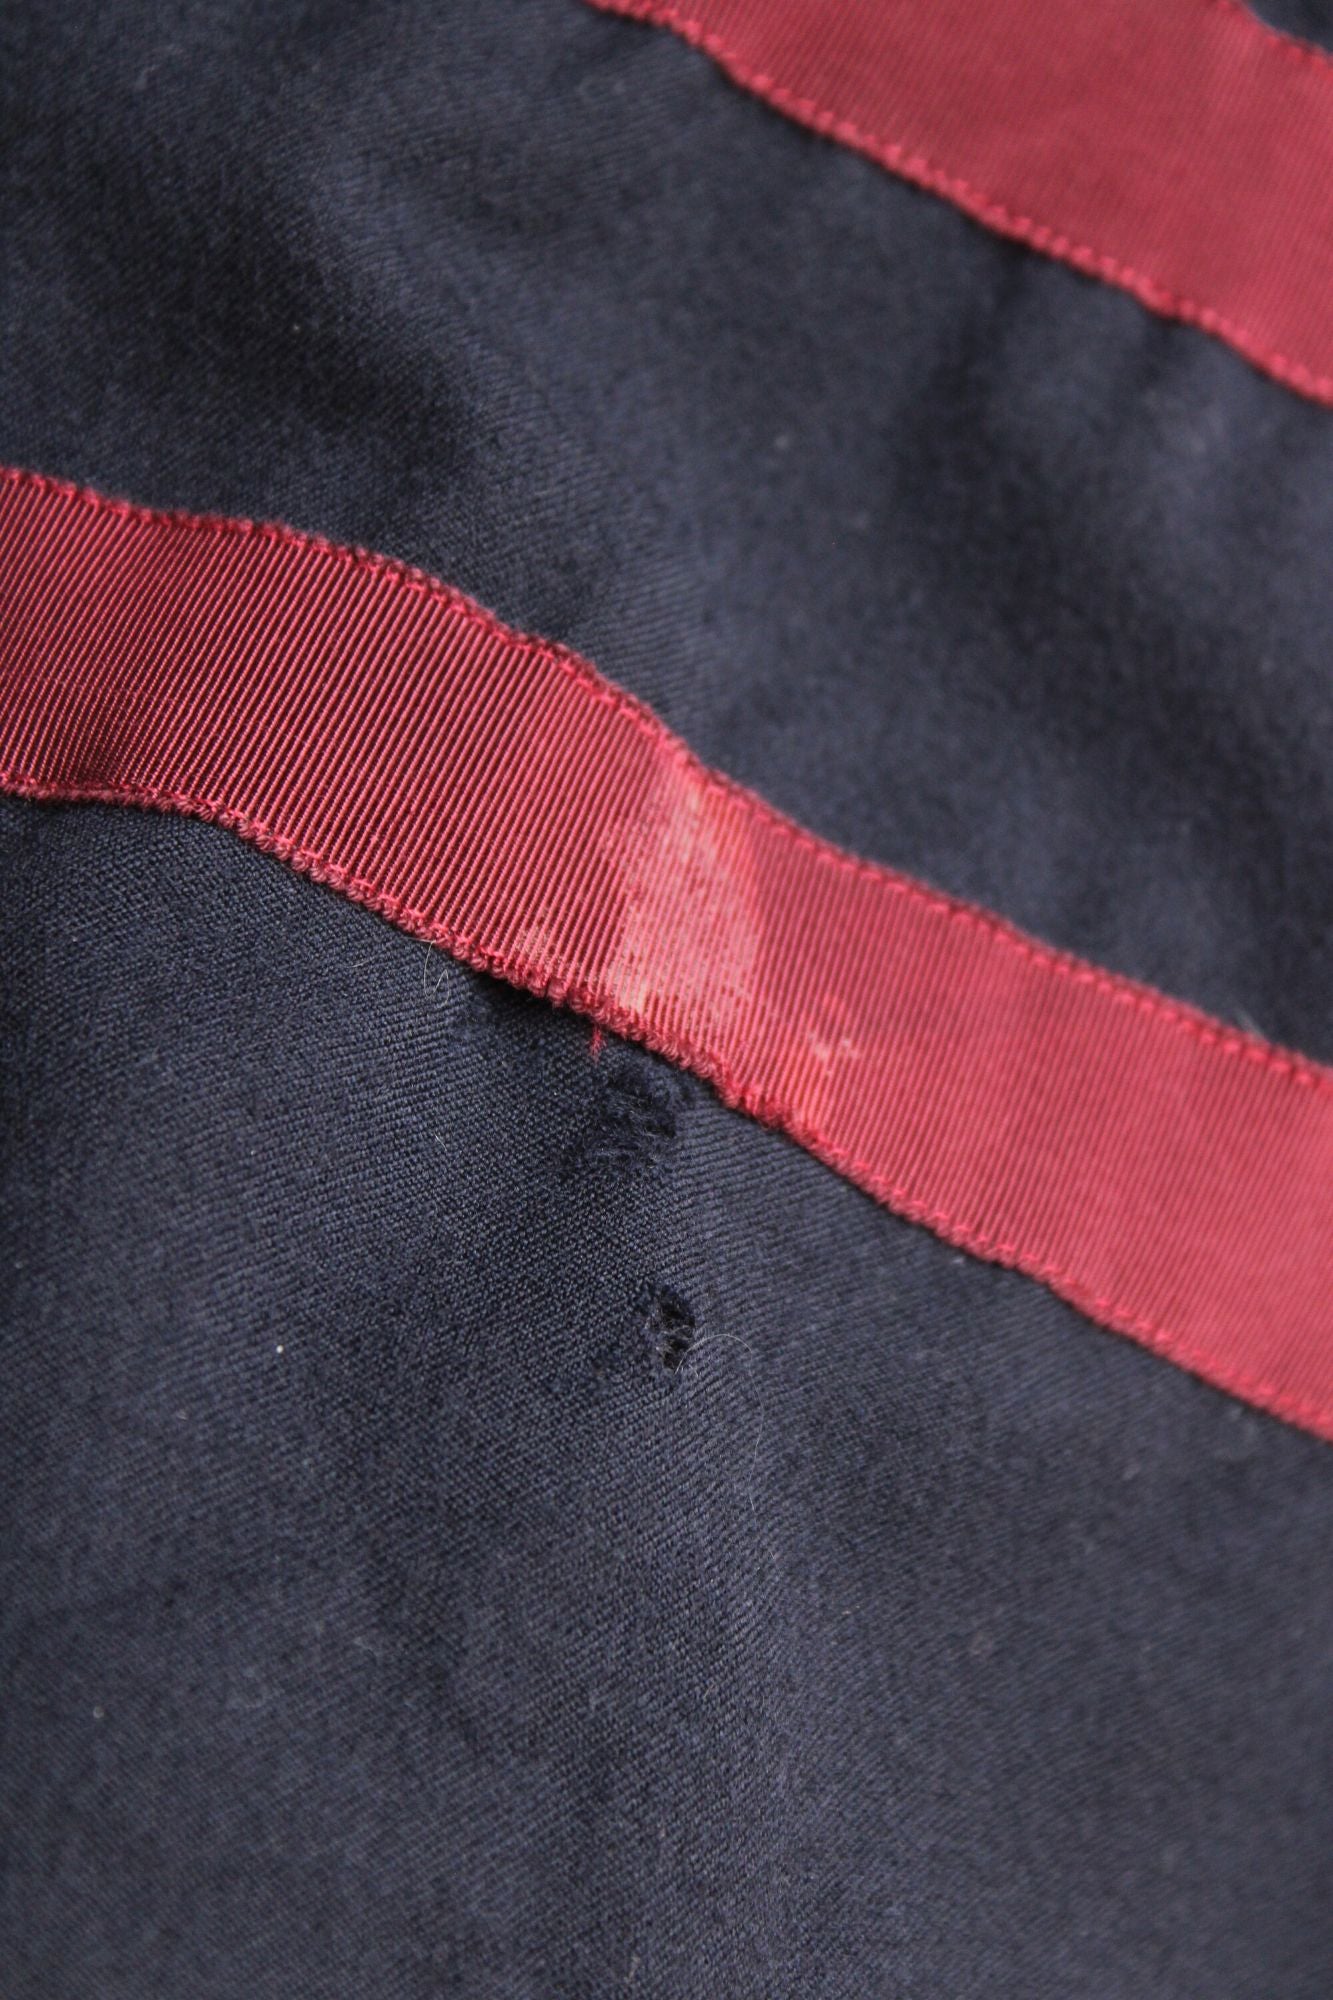 Vintage Ralph Lauren Skirt, Navy Blue Wool Tea Length with Burgundy Stripes, Size 6